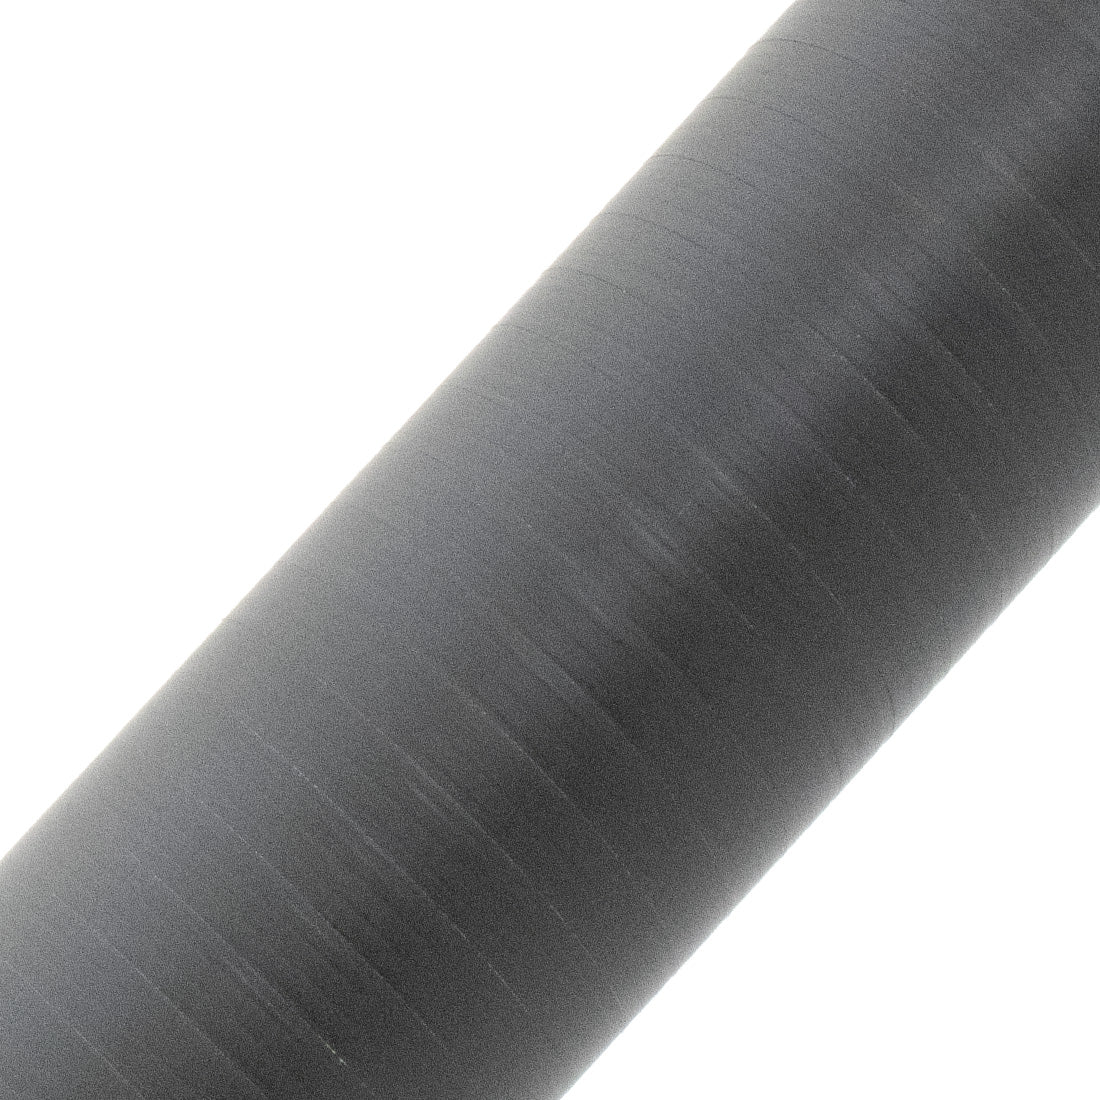 XERO Universal Extension Pole - Carbon Fiber Detailed Close-Up View